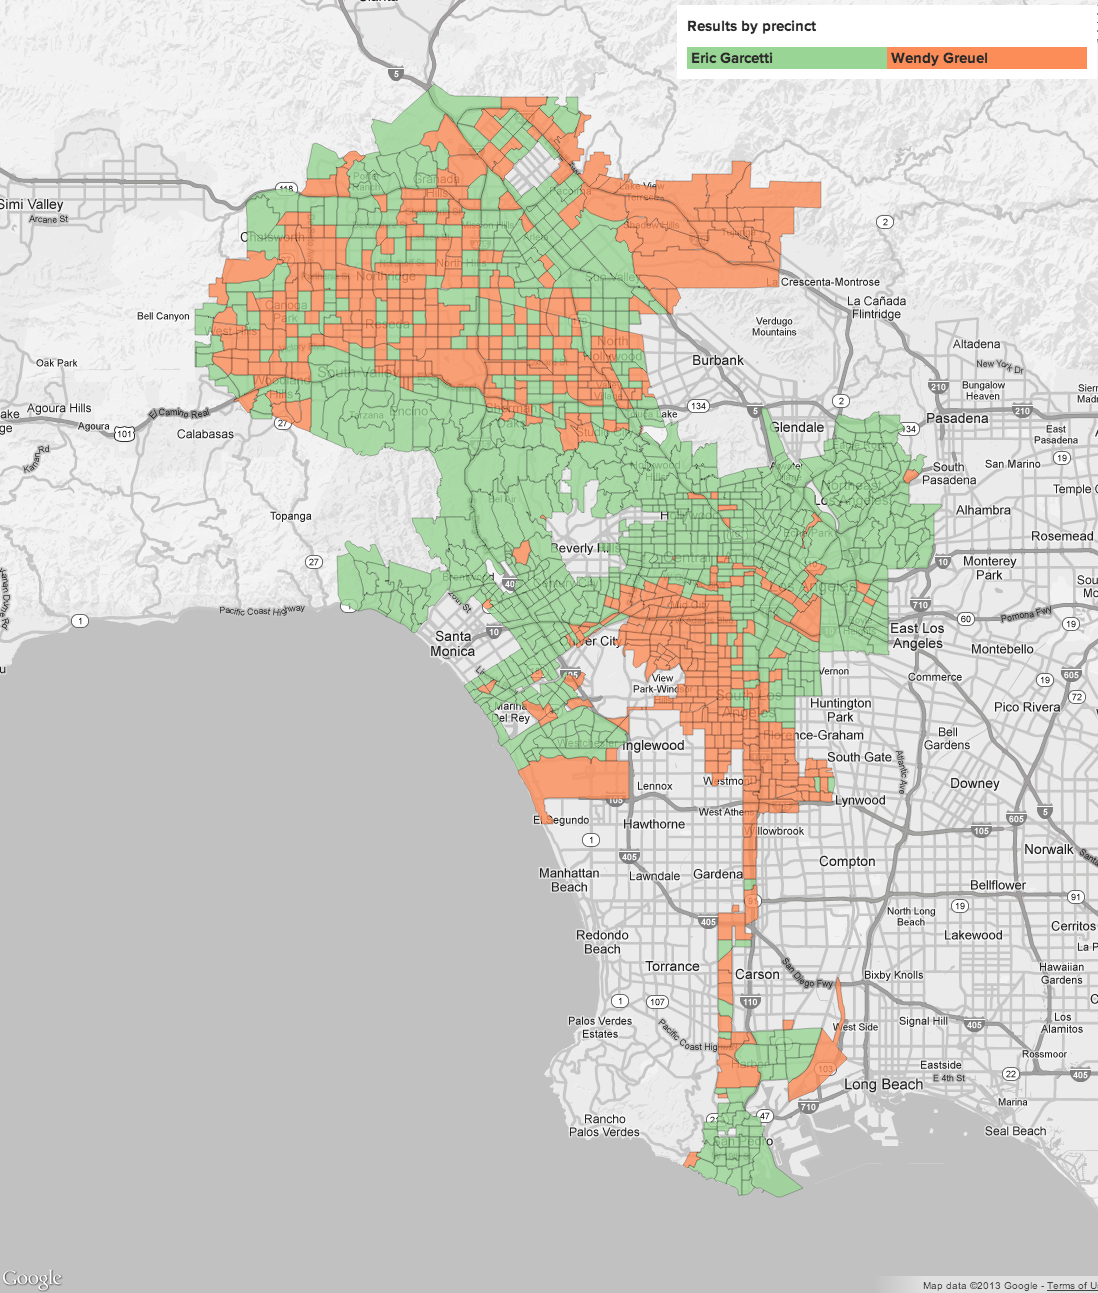 2013 L.A. Mayor voting patterns by precinct